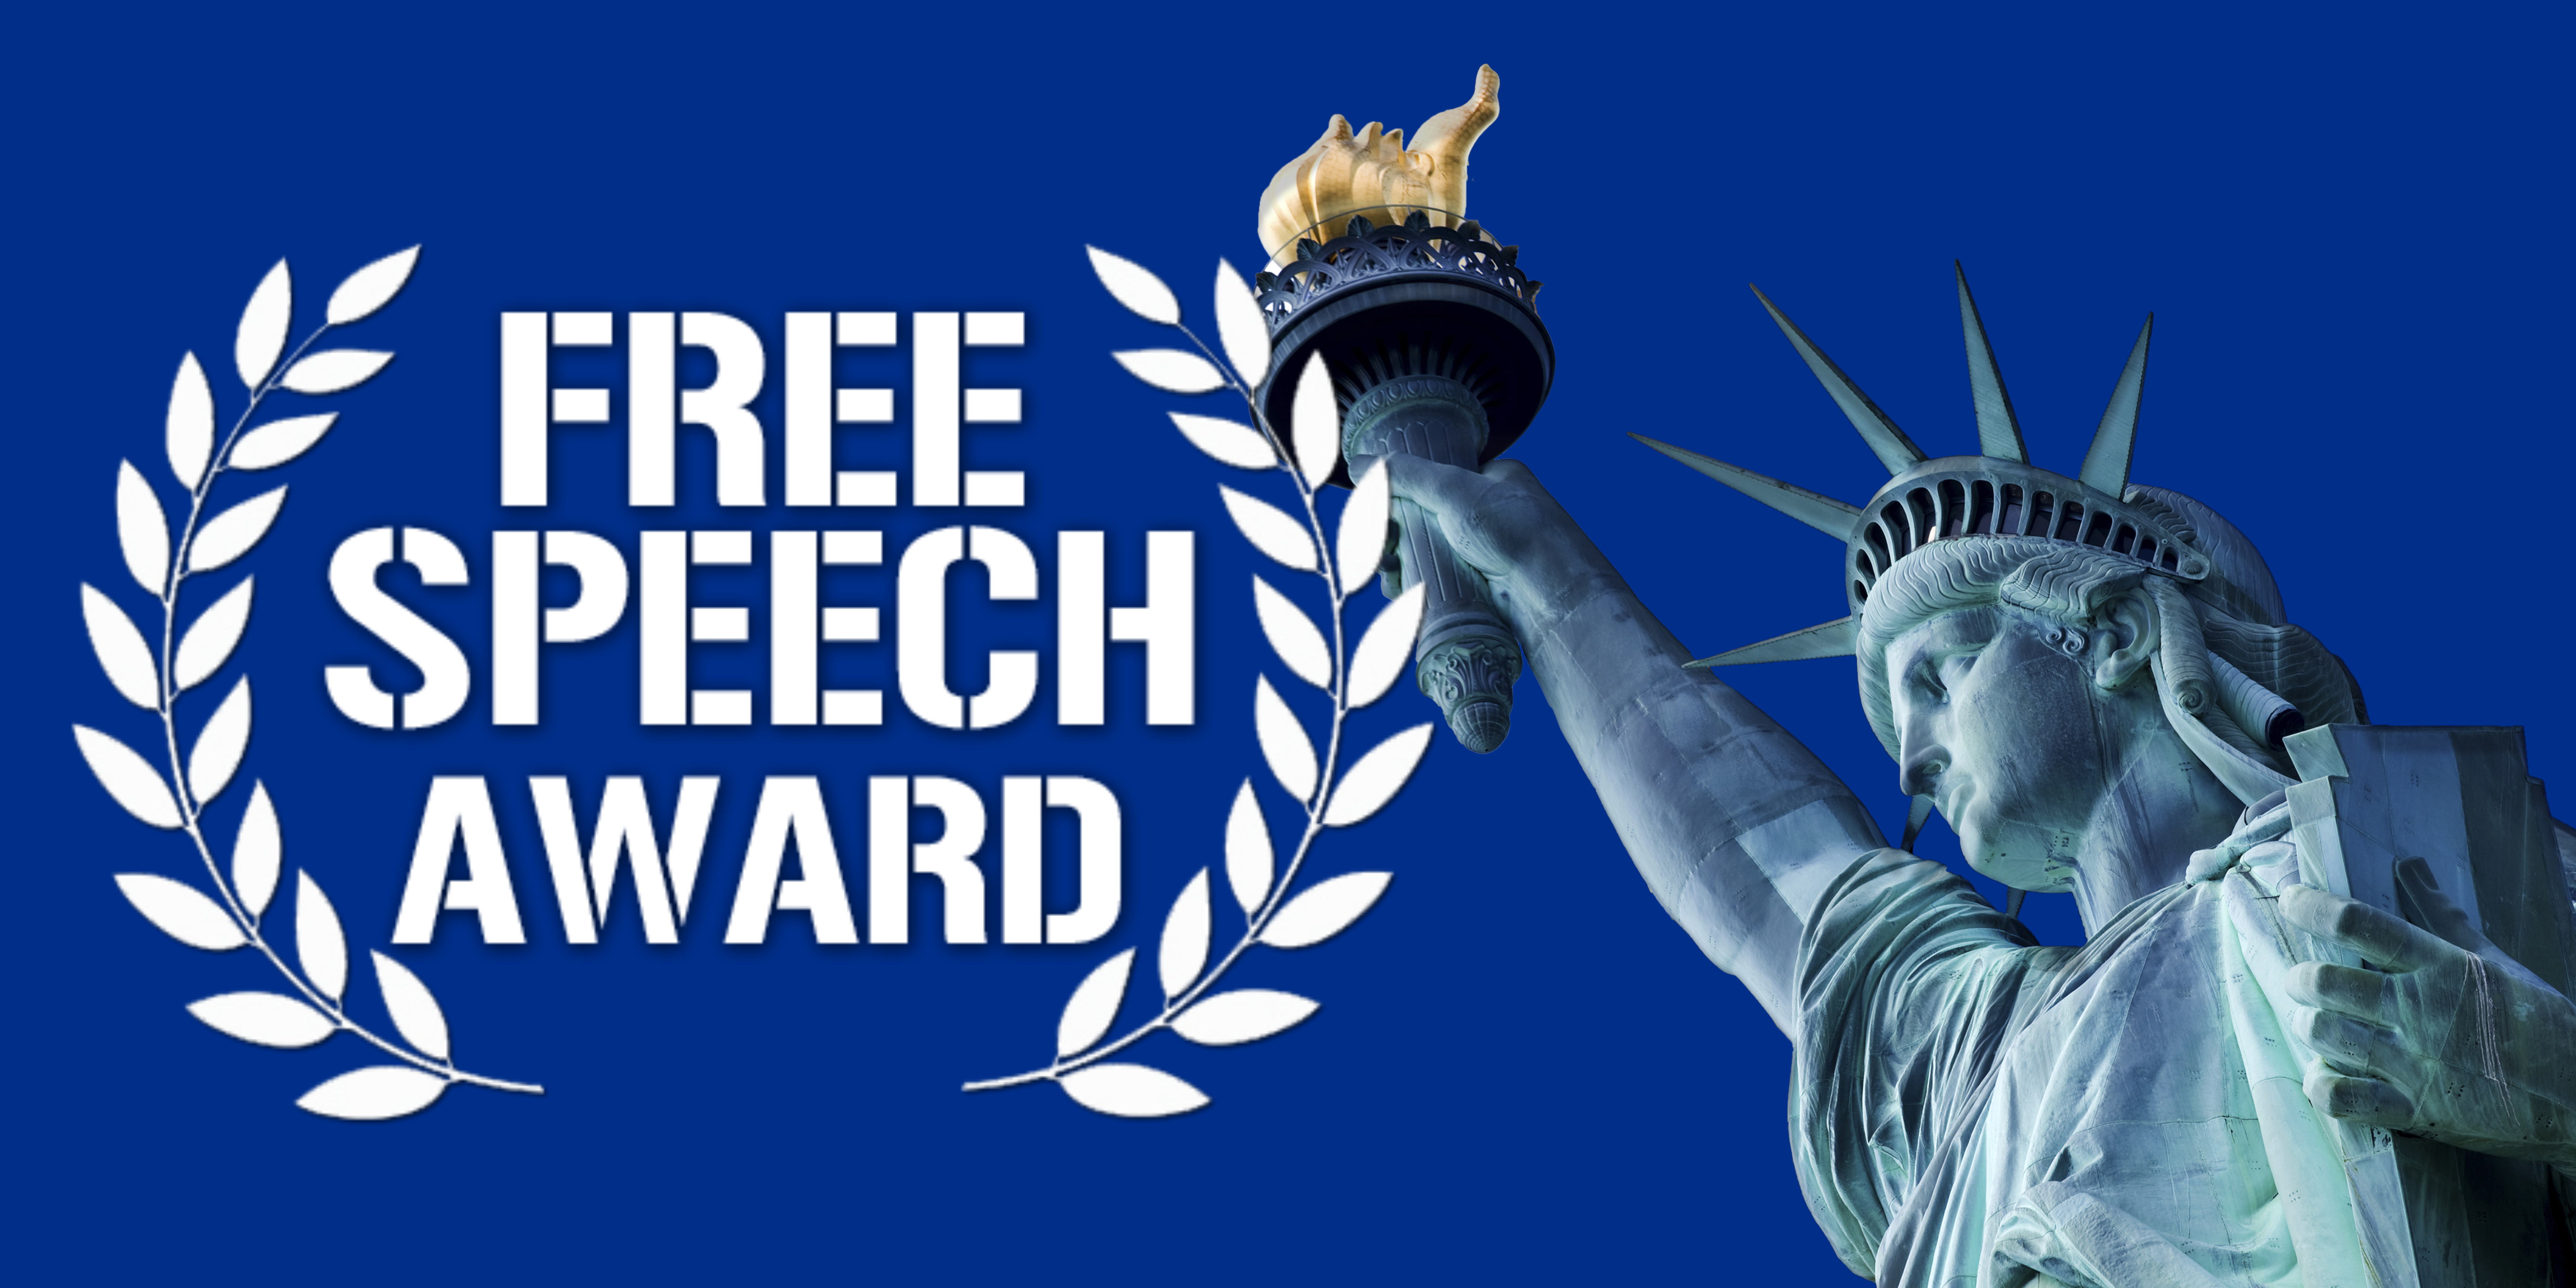 Free Speech Award (1)